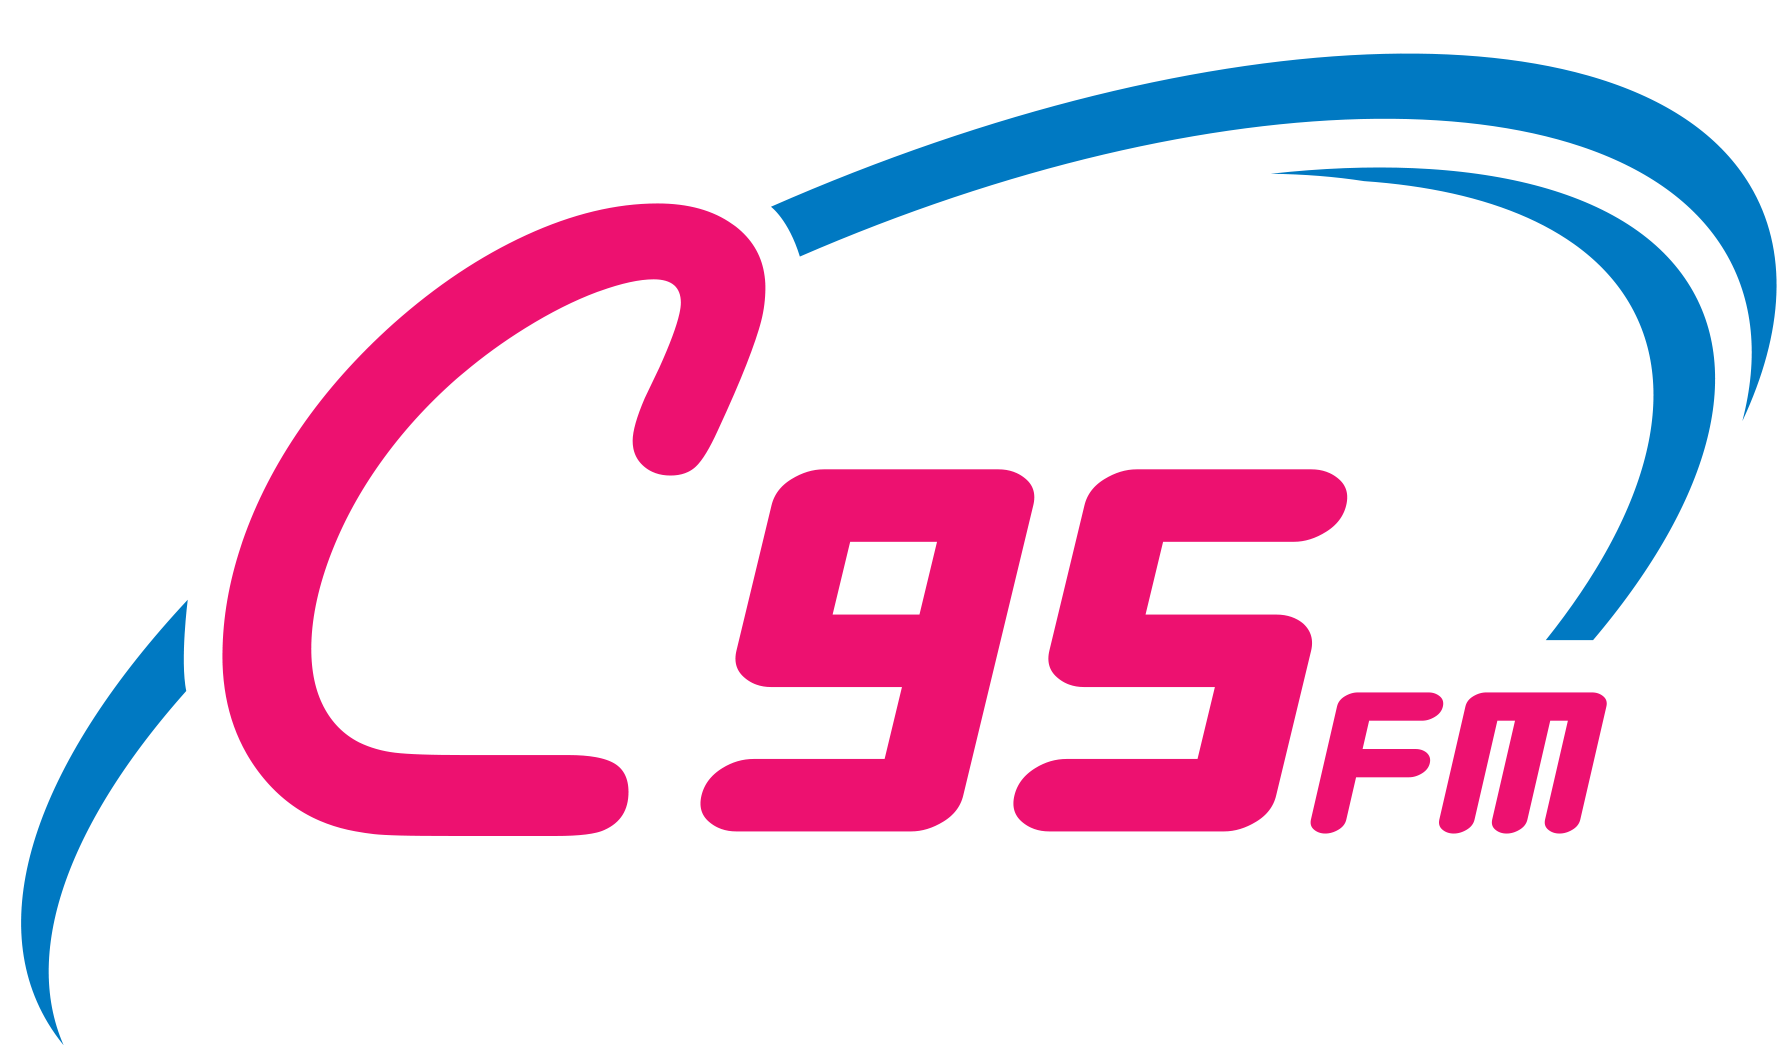 C95 FM logo